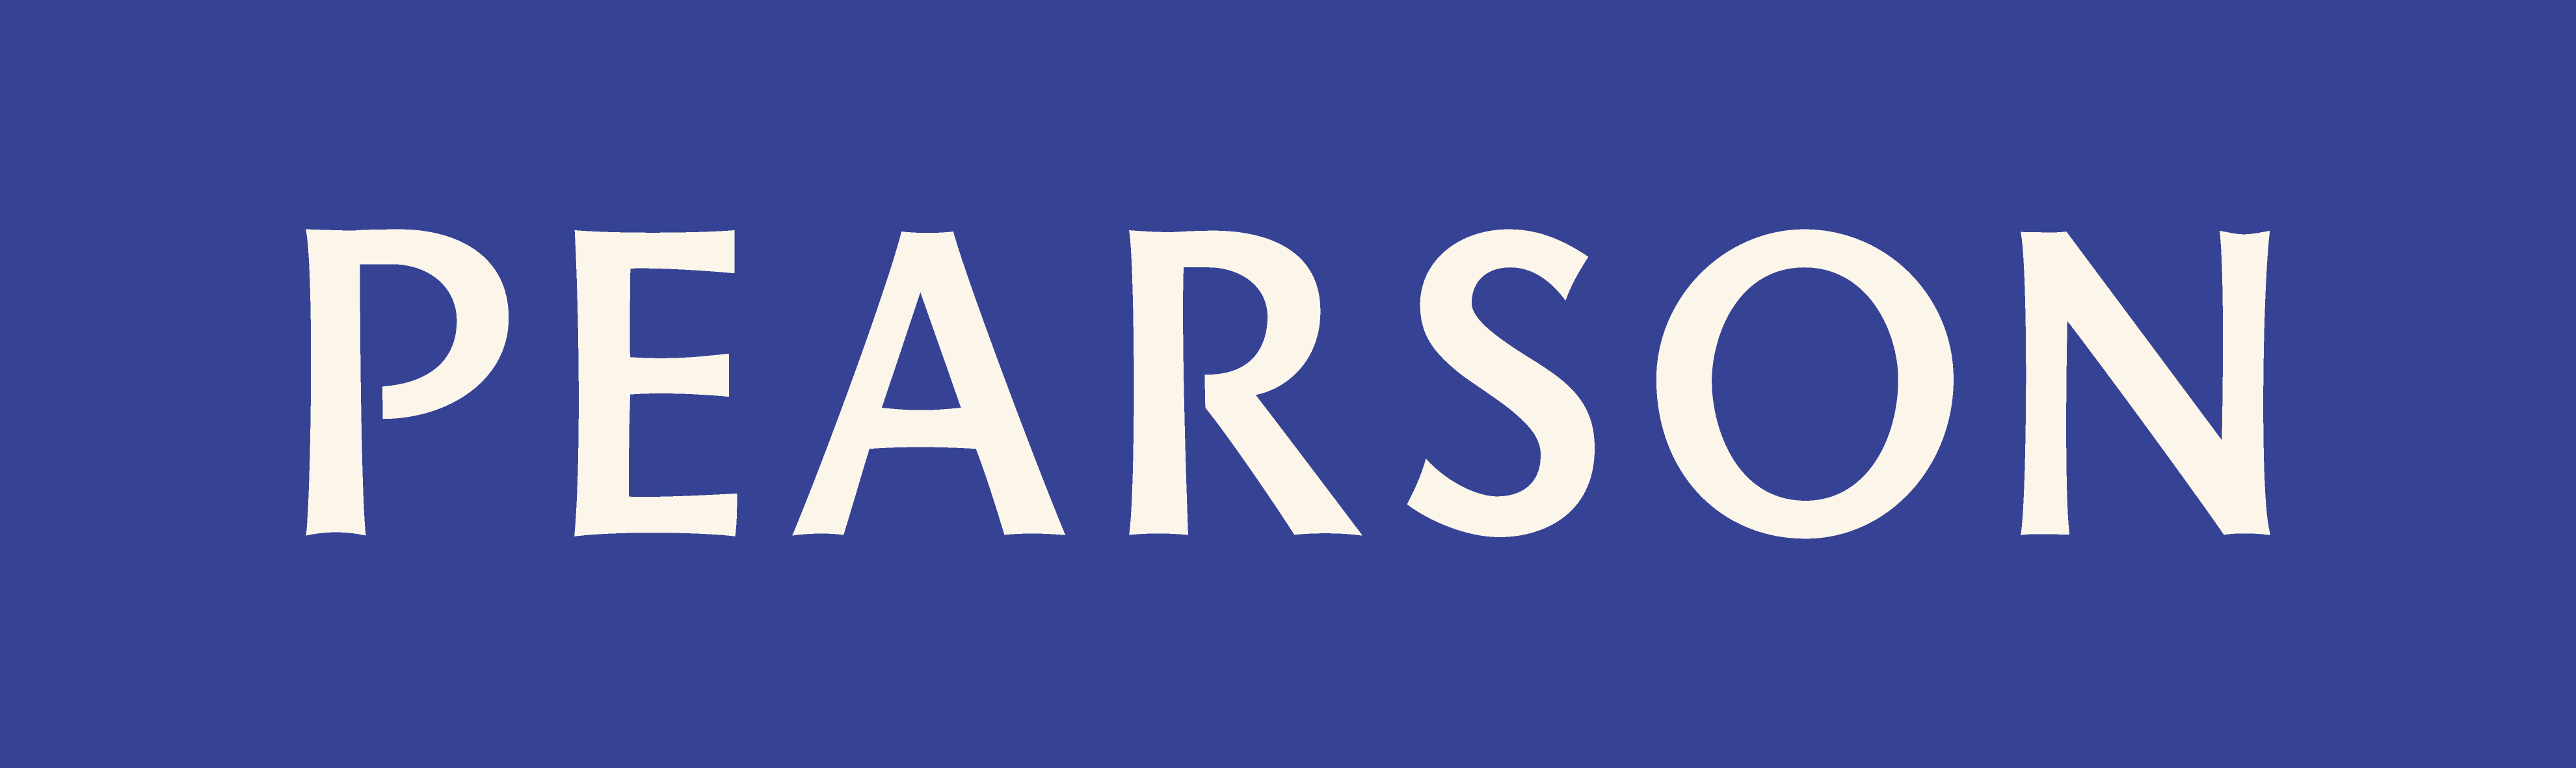 Pearson Education Logo - Pearson Logos